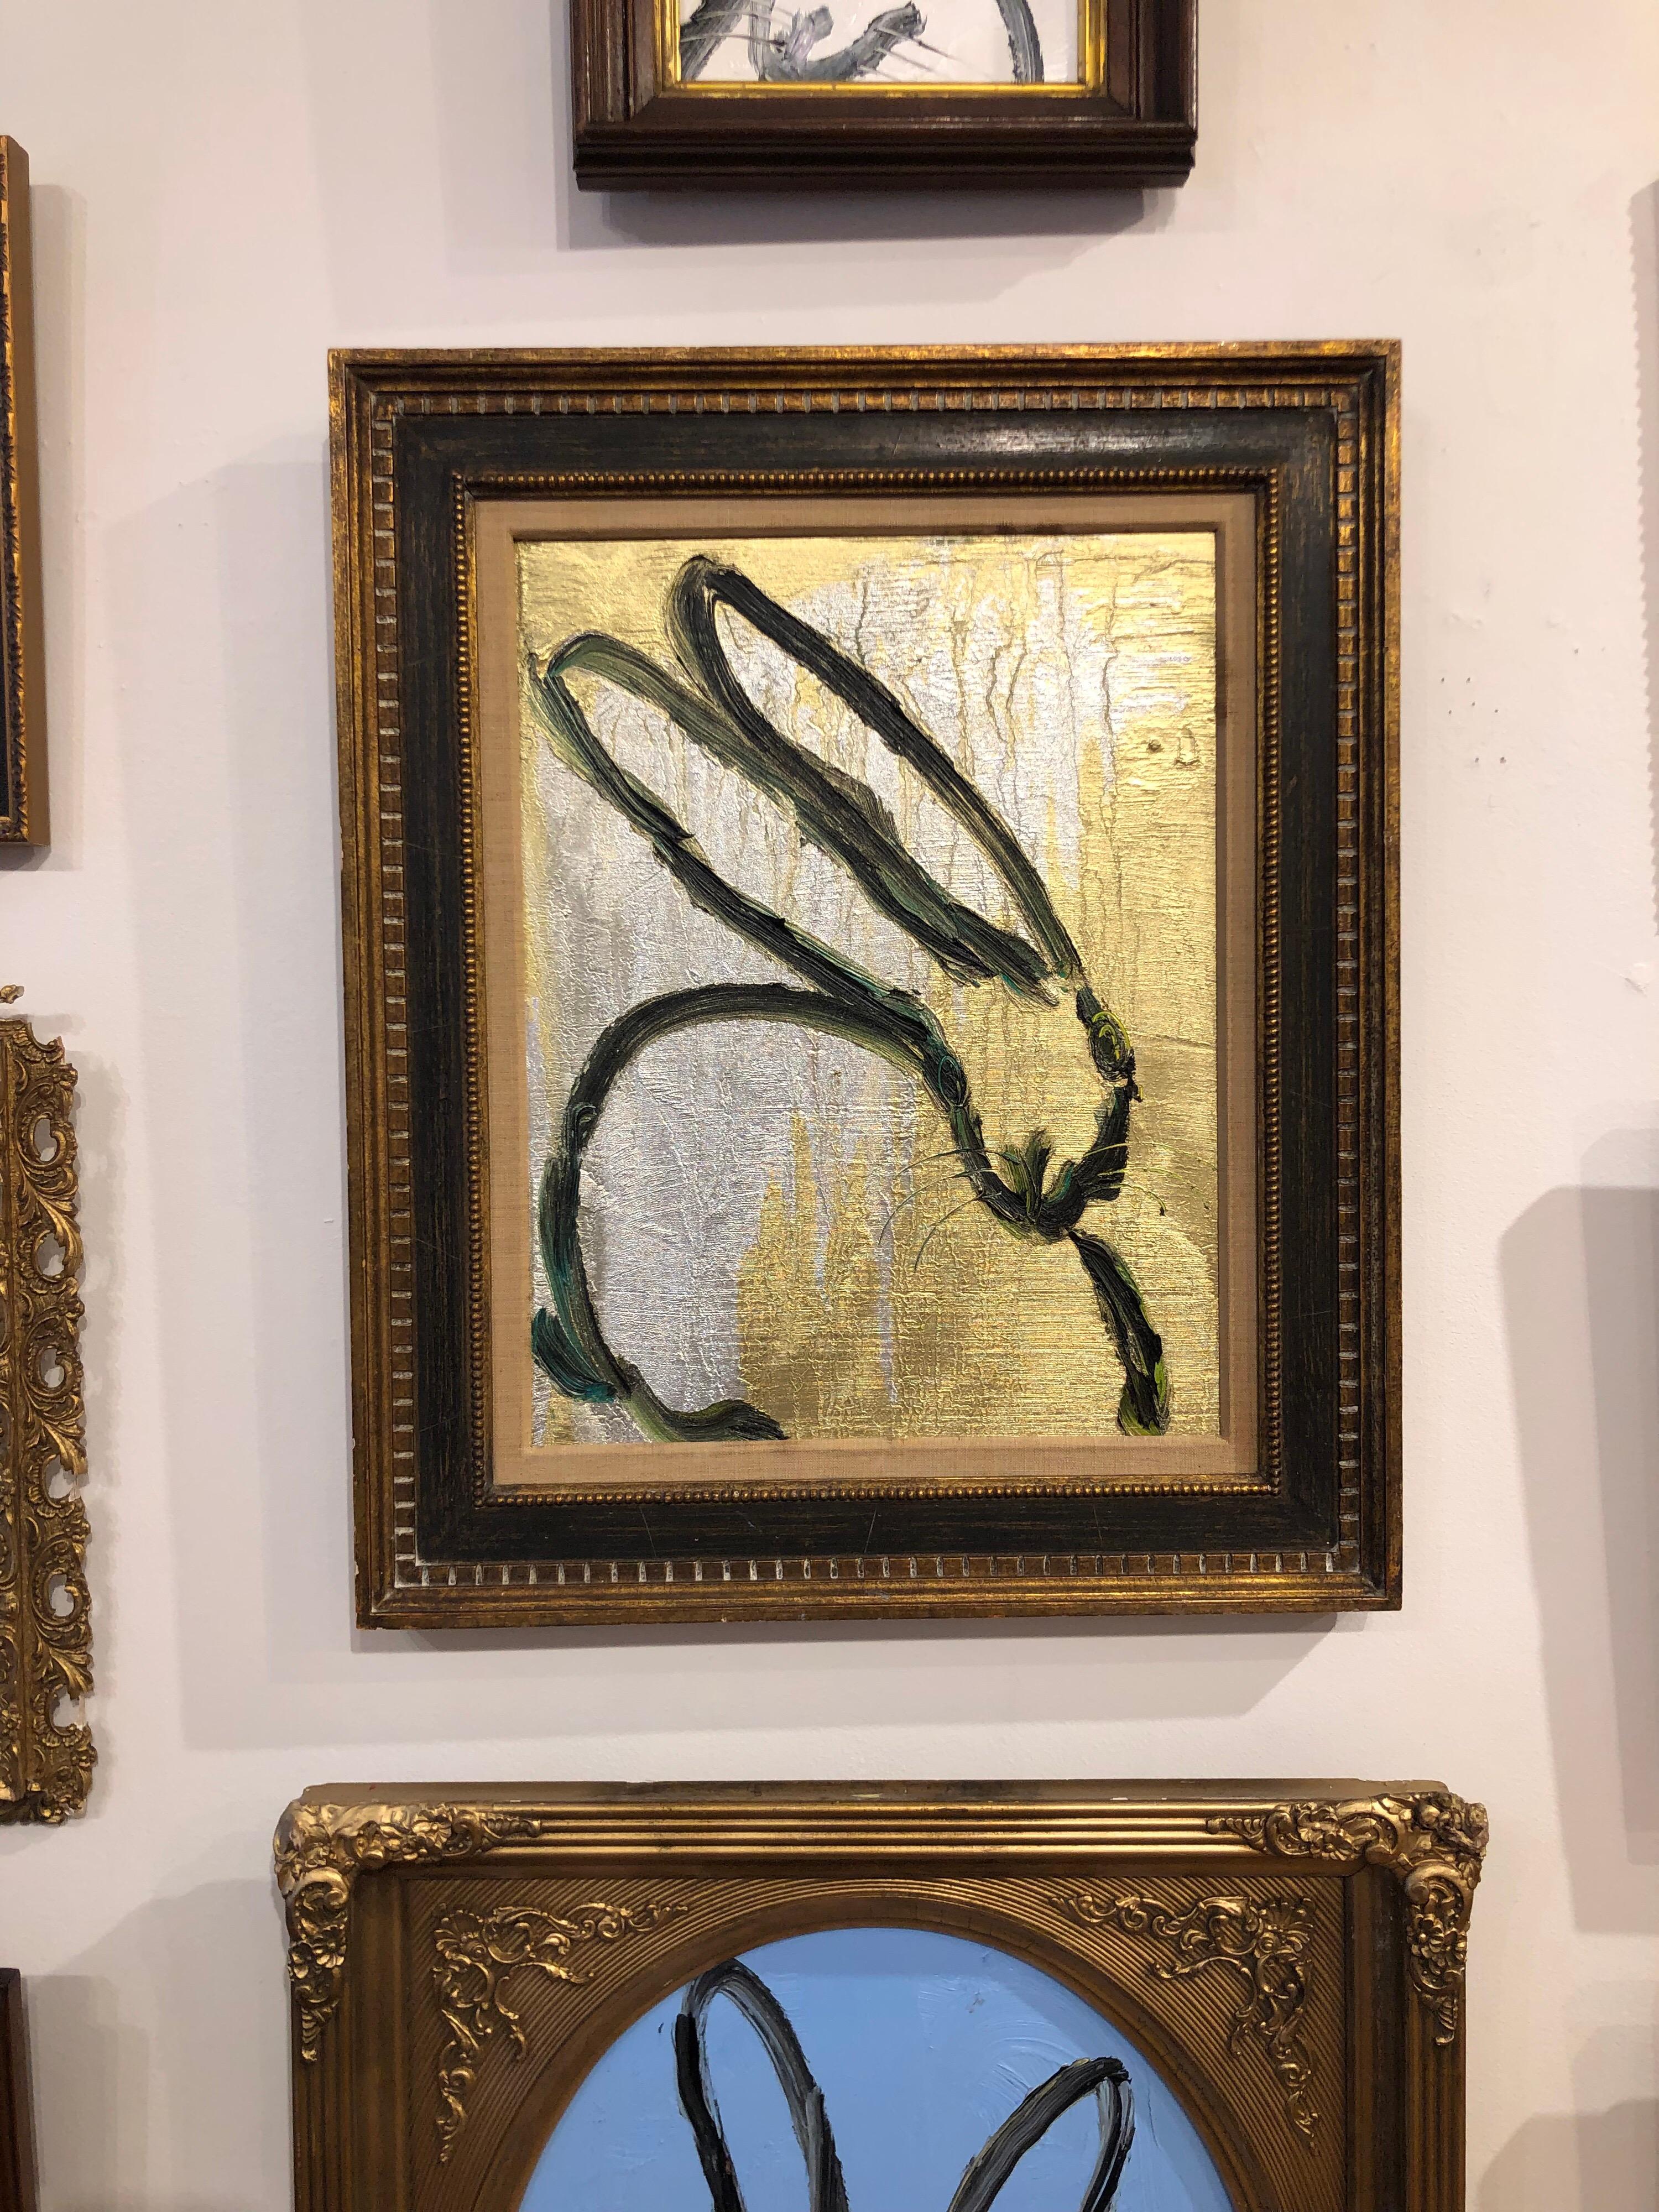 Artist:  Slonem, Hunt
Title:  Silver & Gold Bunny
Series:  Bunnies
Date:  2019
Medium:  Oil on panel
Unframed Dimensions:  18